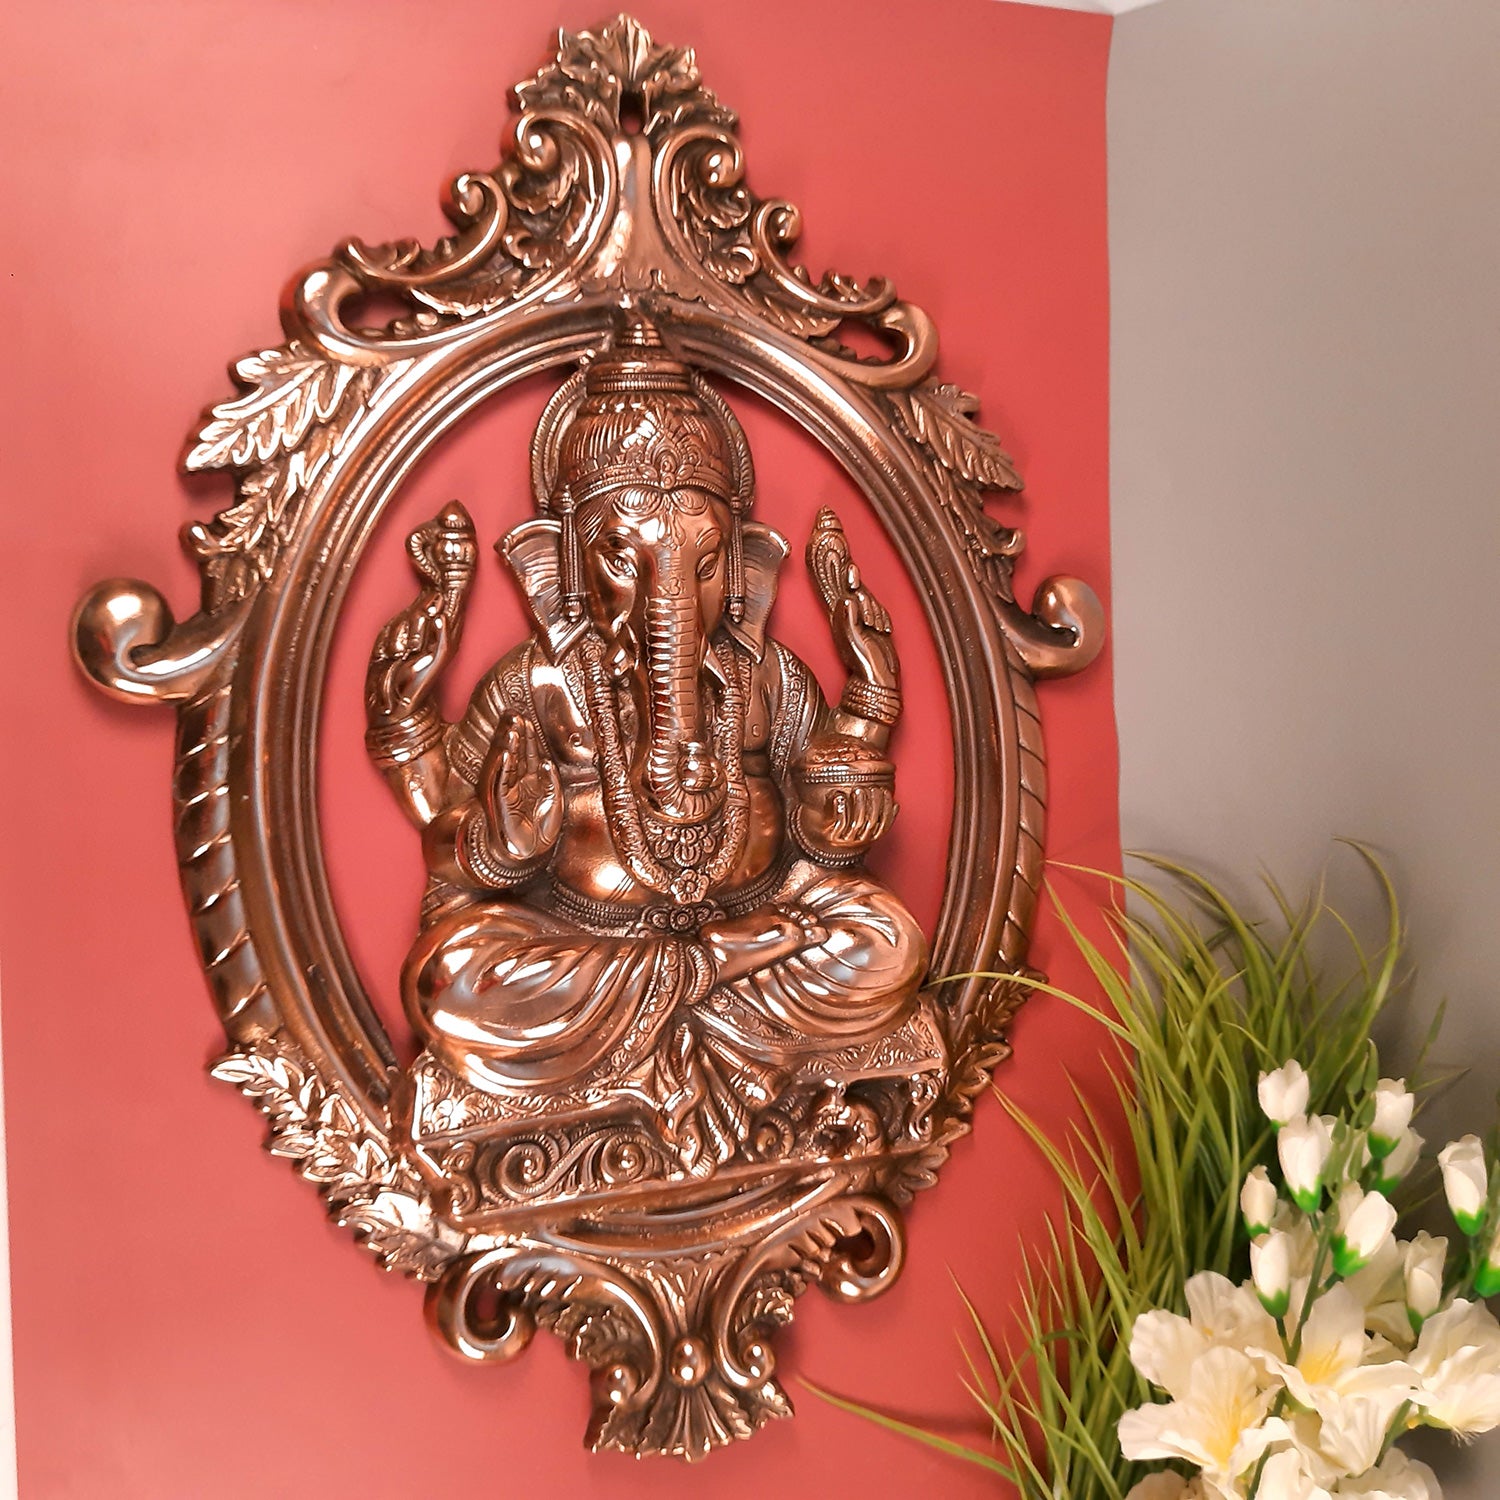 Ganesh Idol Wall Hanging | Big Lord Ganesha Wall Statue Decor | Religious & Spiritual Wall Art - For Puja, Home & Entrance Living Room & Gift - Apkamart